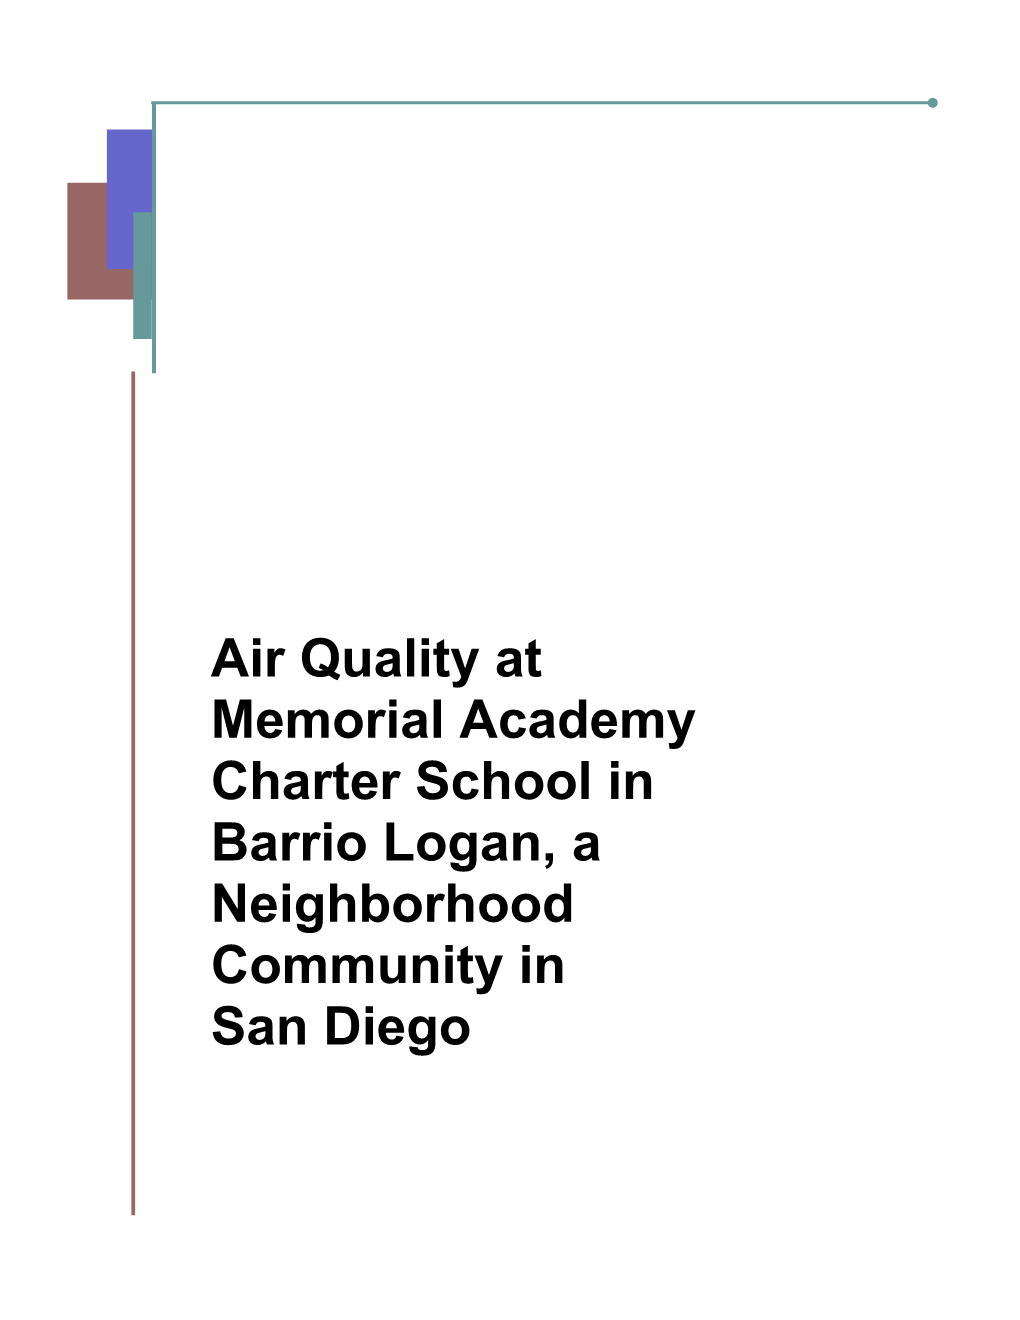 Charter School in Barrio Logan, a Neighborhood Community In